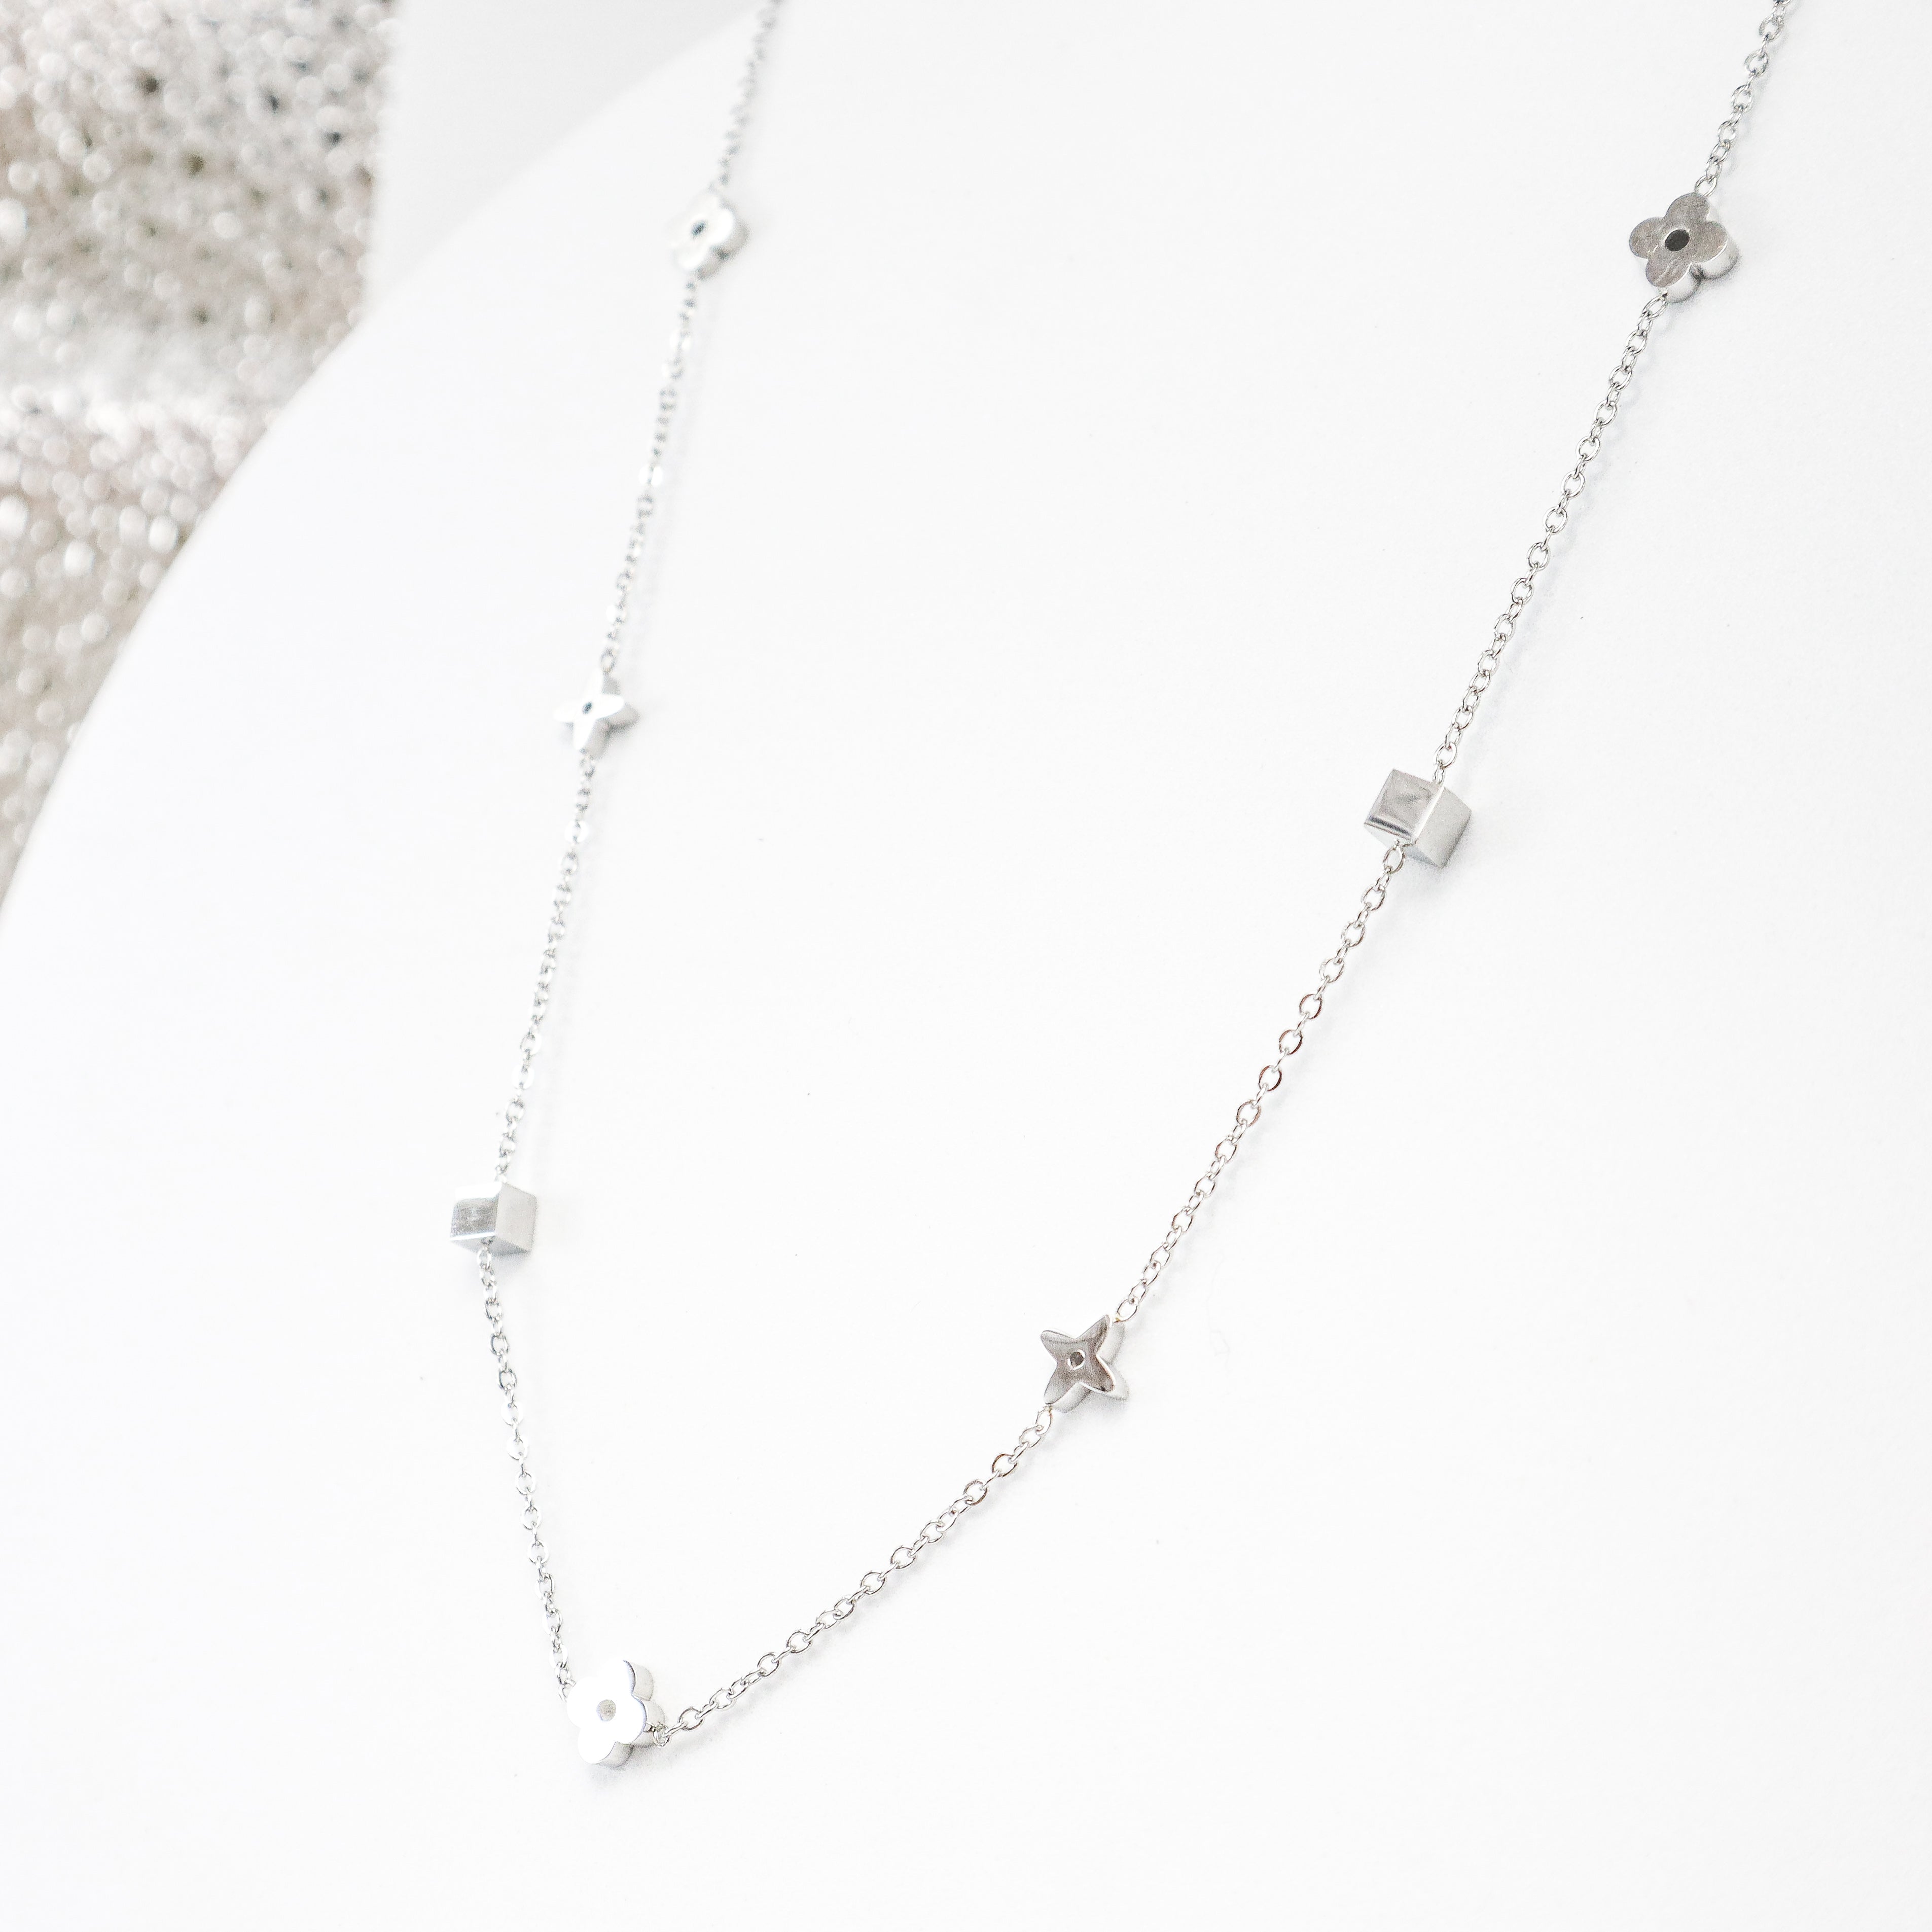 Silver Clover Flower Necklace